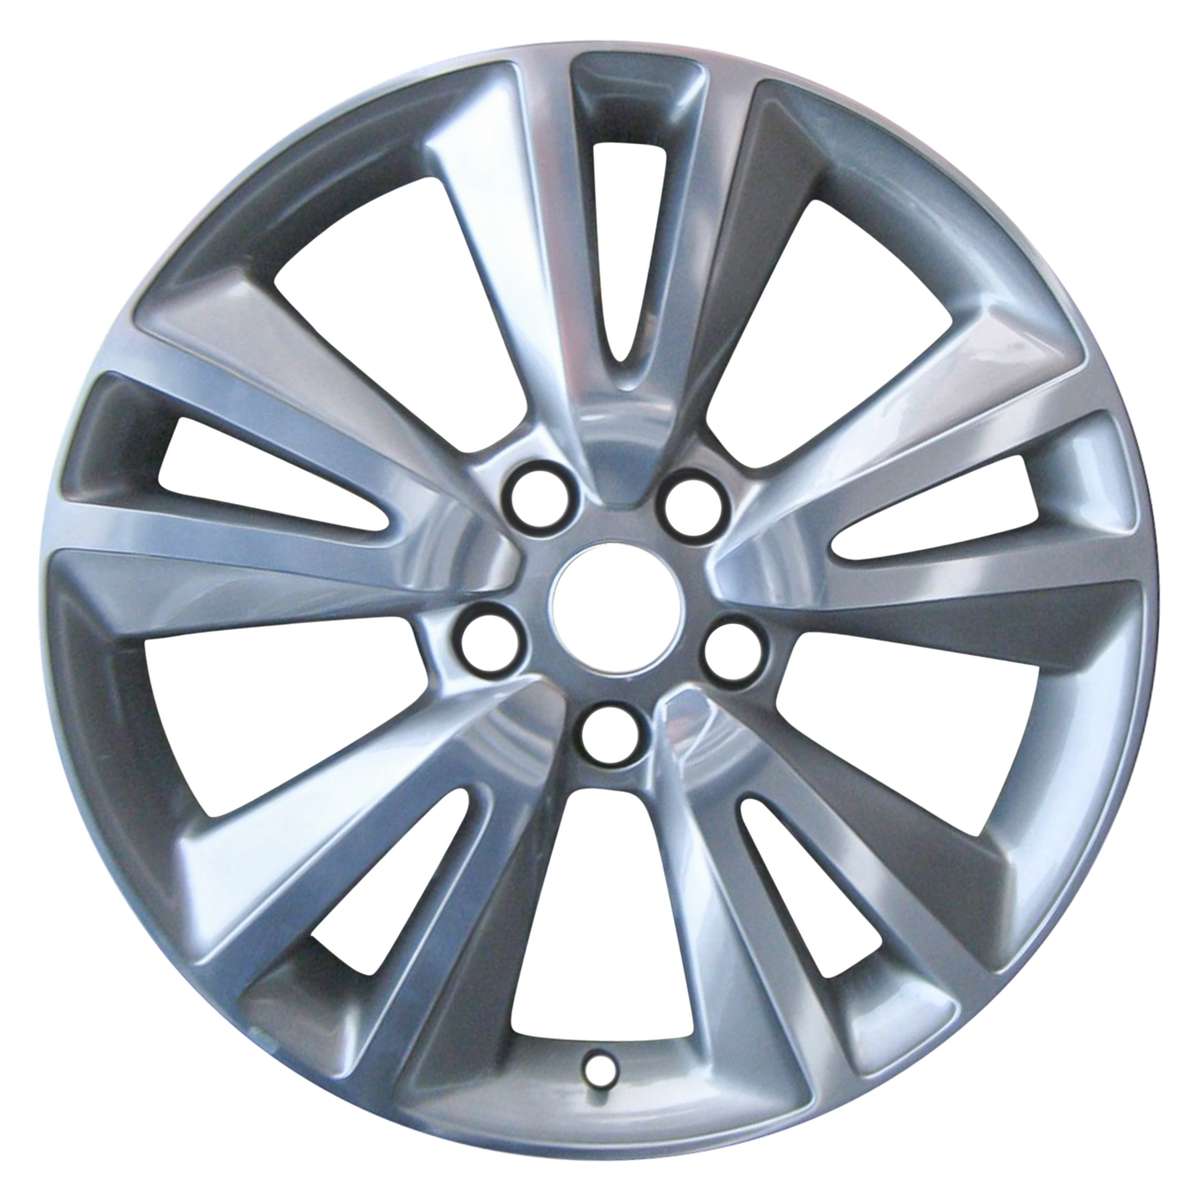 2014 Dodge Durango 20" OEM Wheel Rim W2393PS